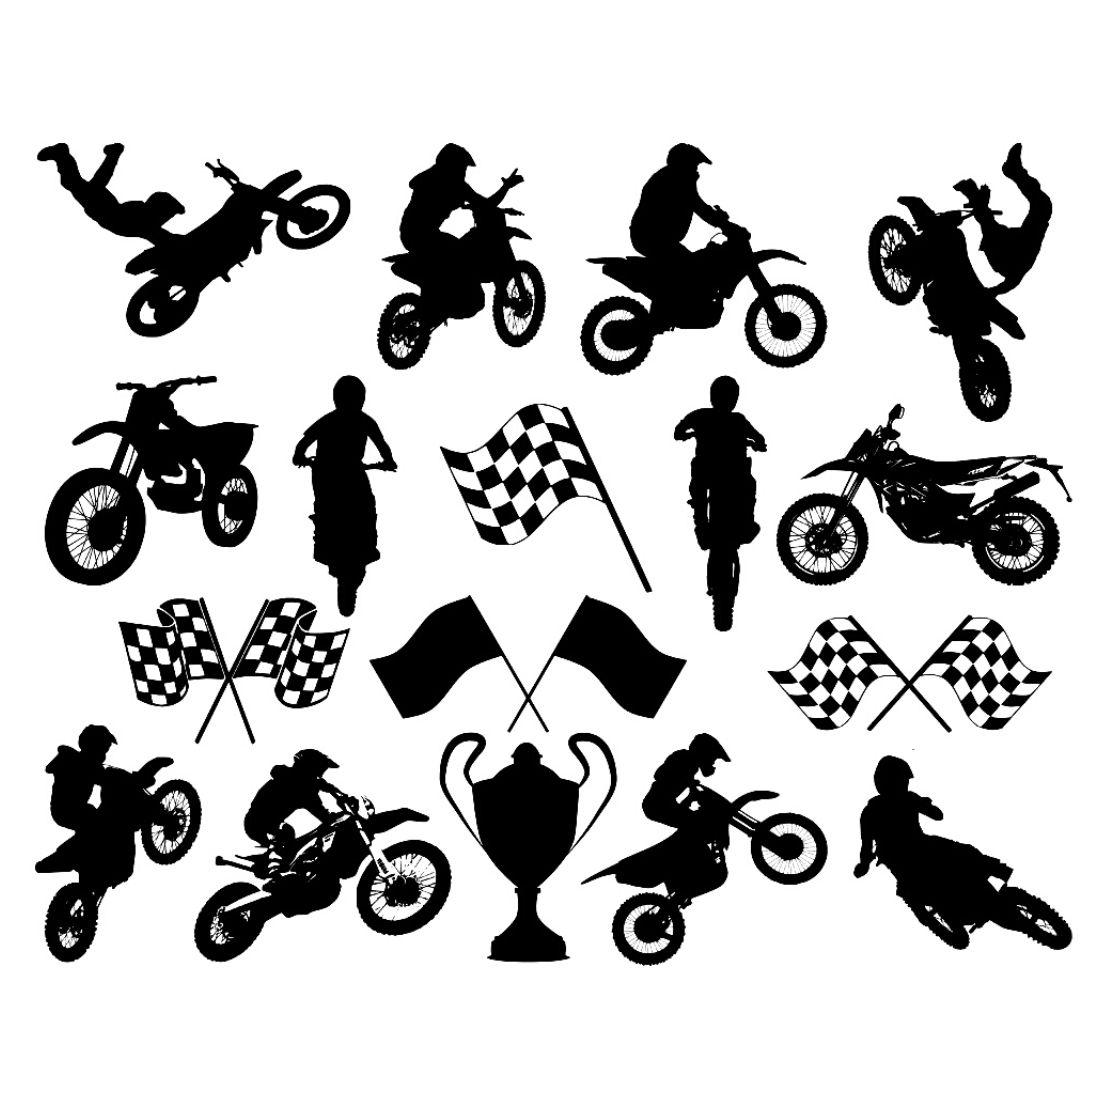 Motocross Silhouette Bundle cover image.